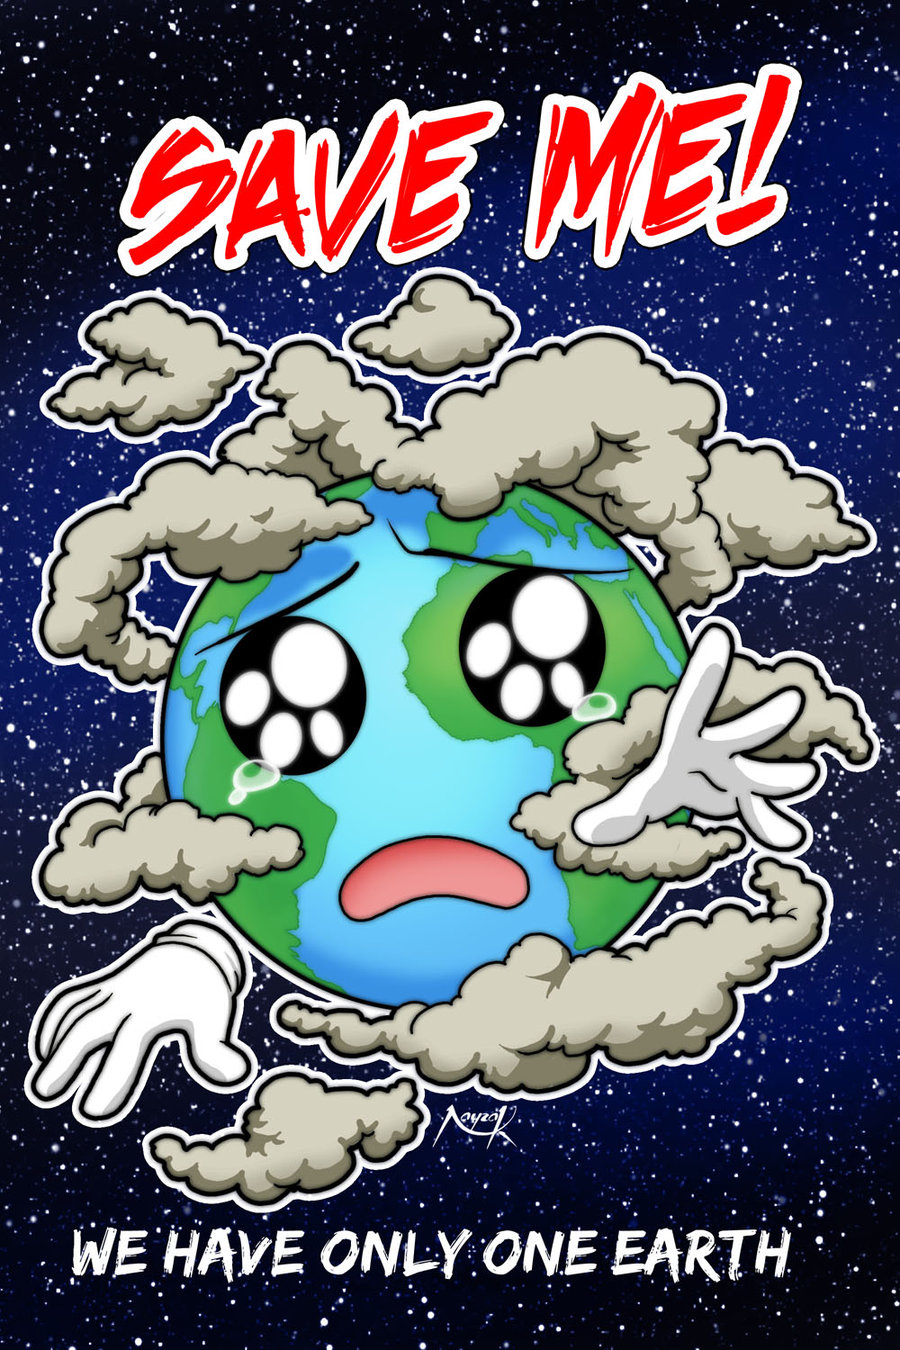 Save earth poster making illustration